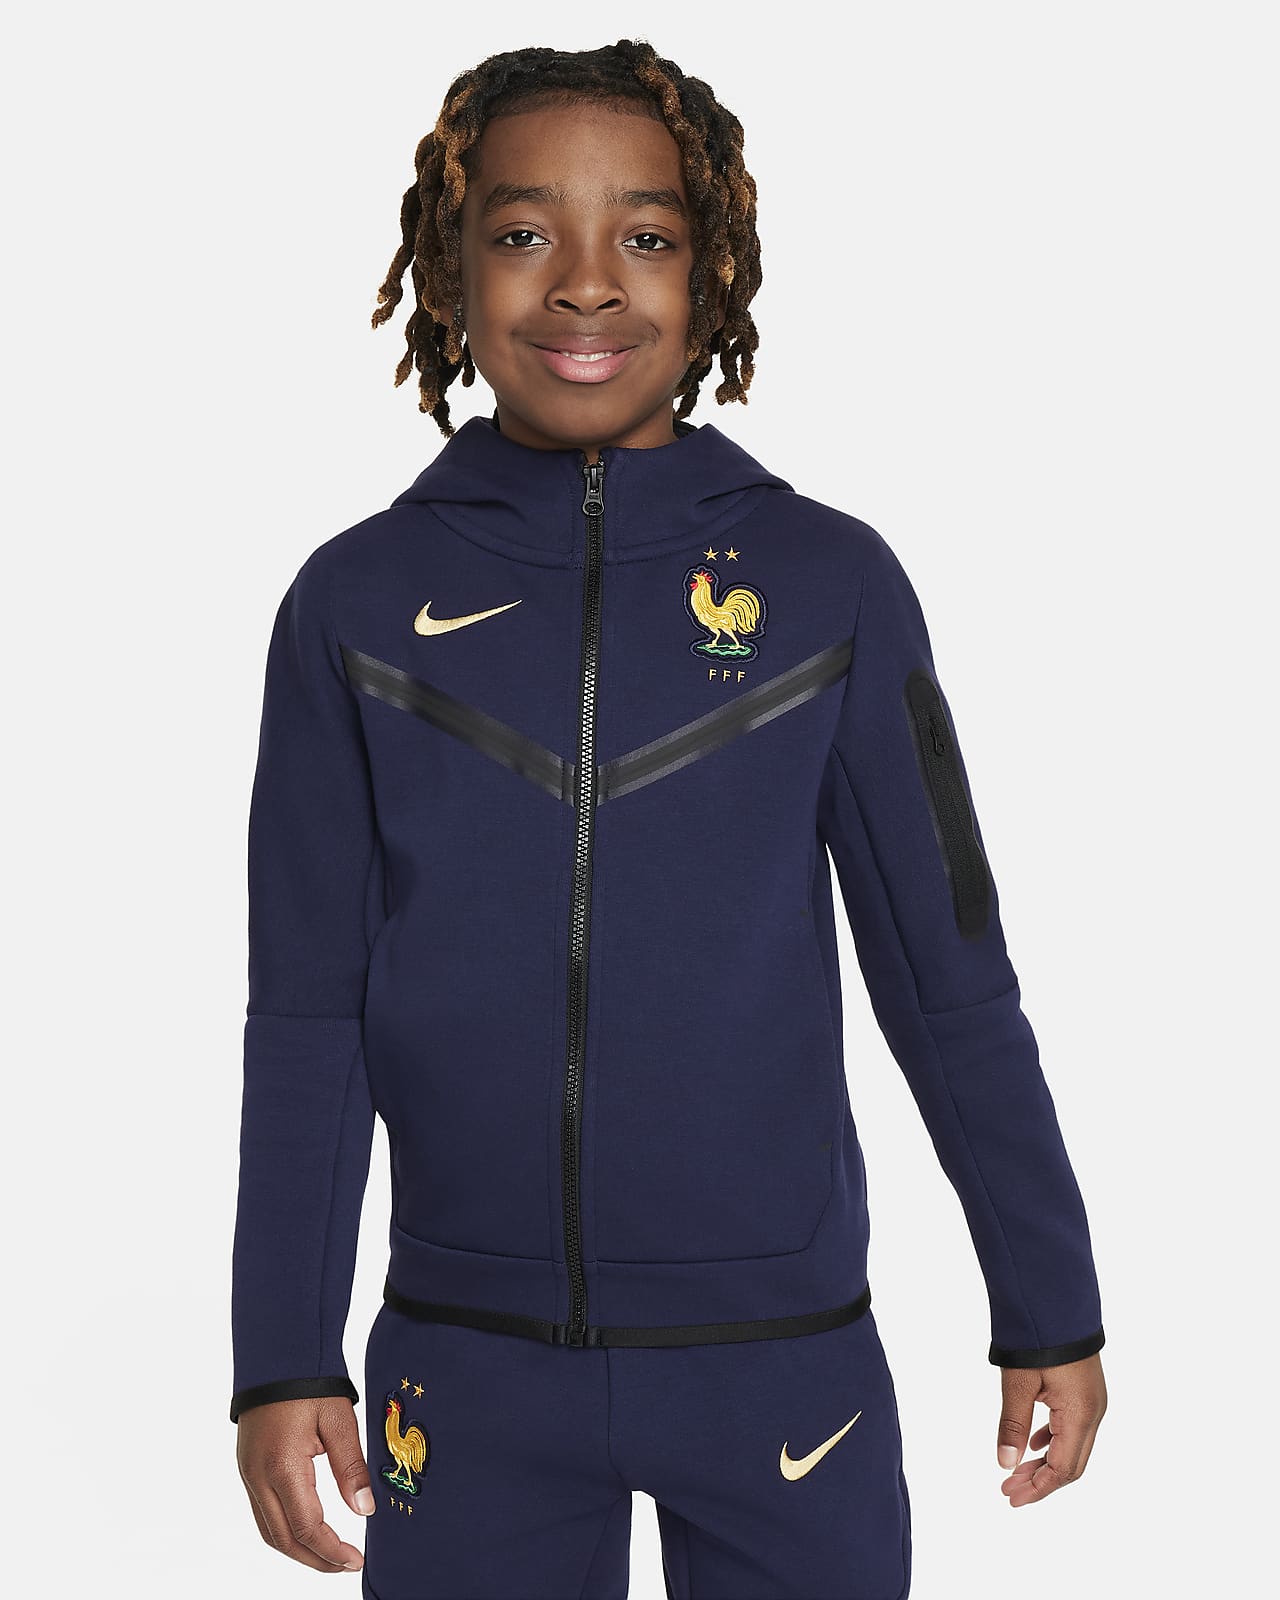 FFF Tech Fleece Sudadera con capucha de fútbol con cremallera completa Nike - Niño